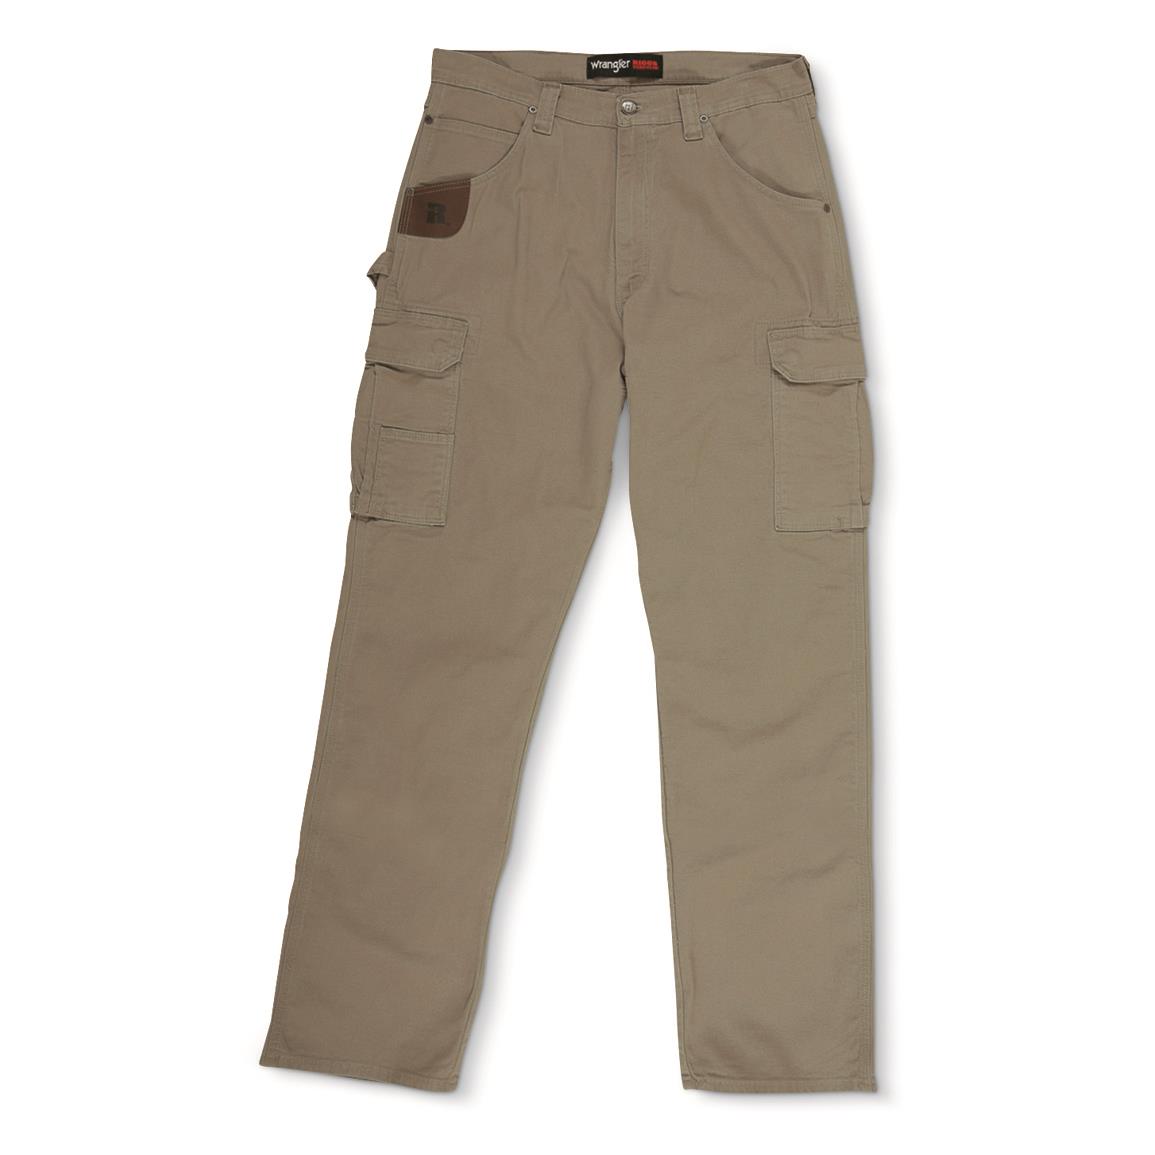 Wrangler RIGGS Workwear Men's Ripstop Ranger Pants - 709241, Jeans & Pants  at Sportsman's Guide